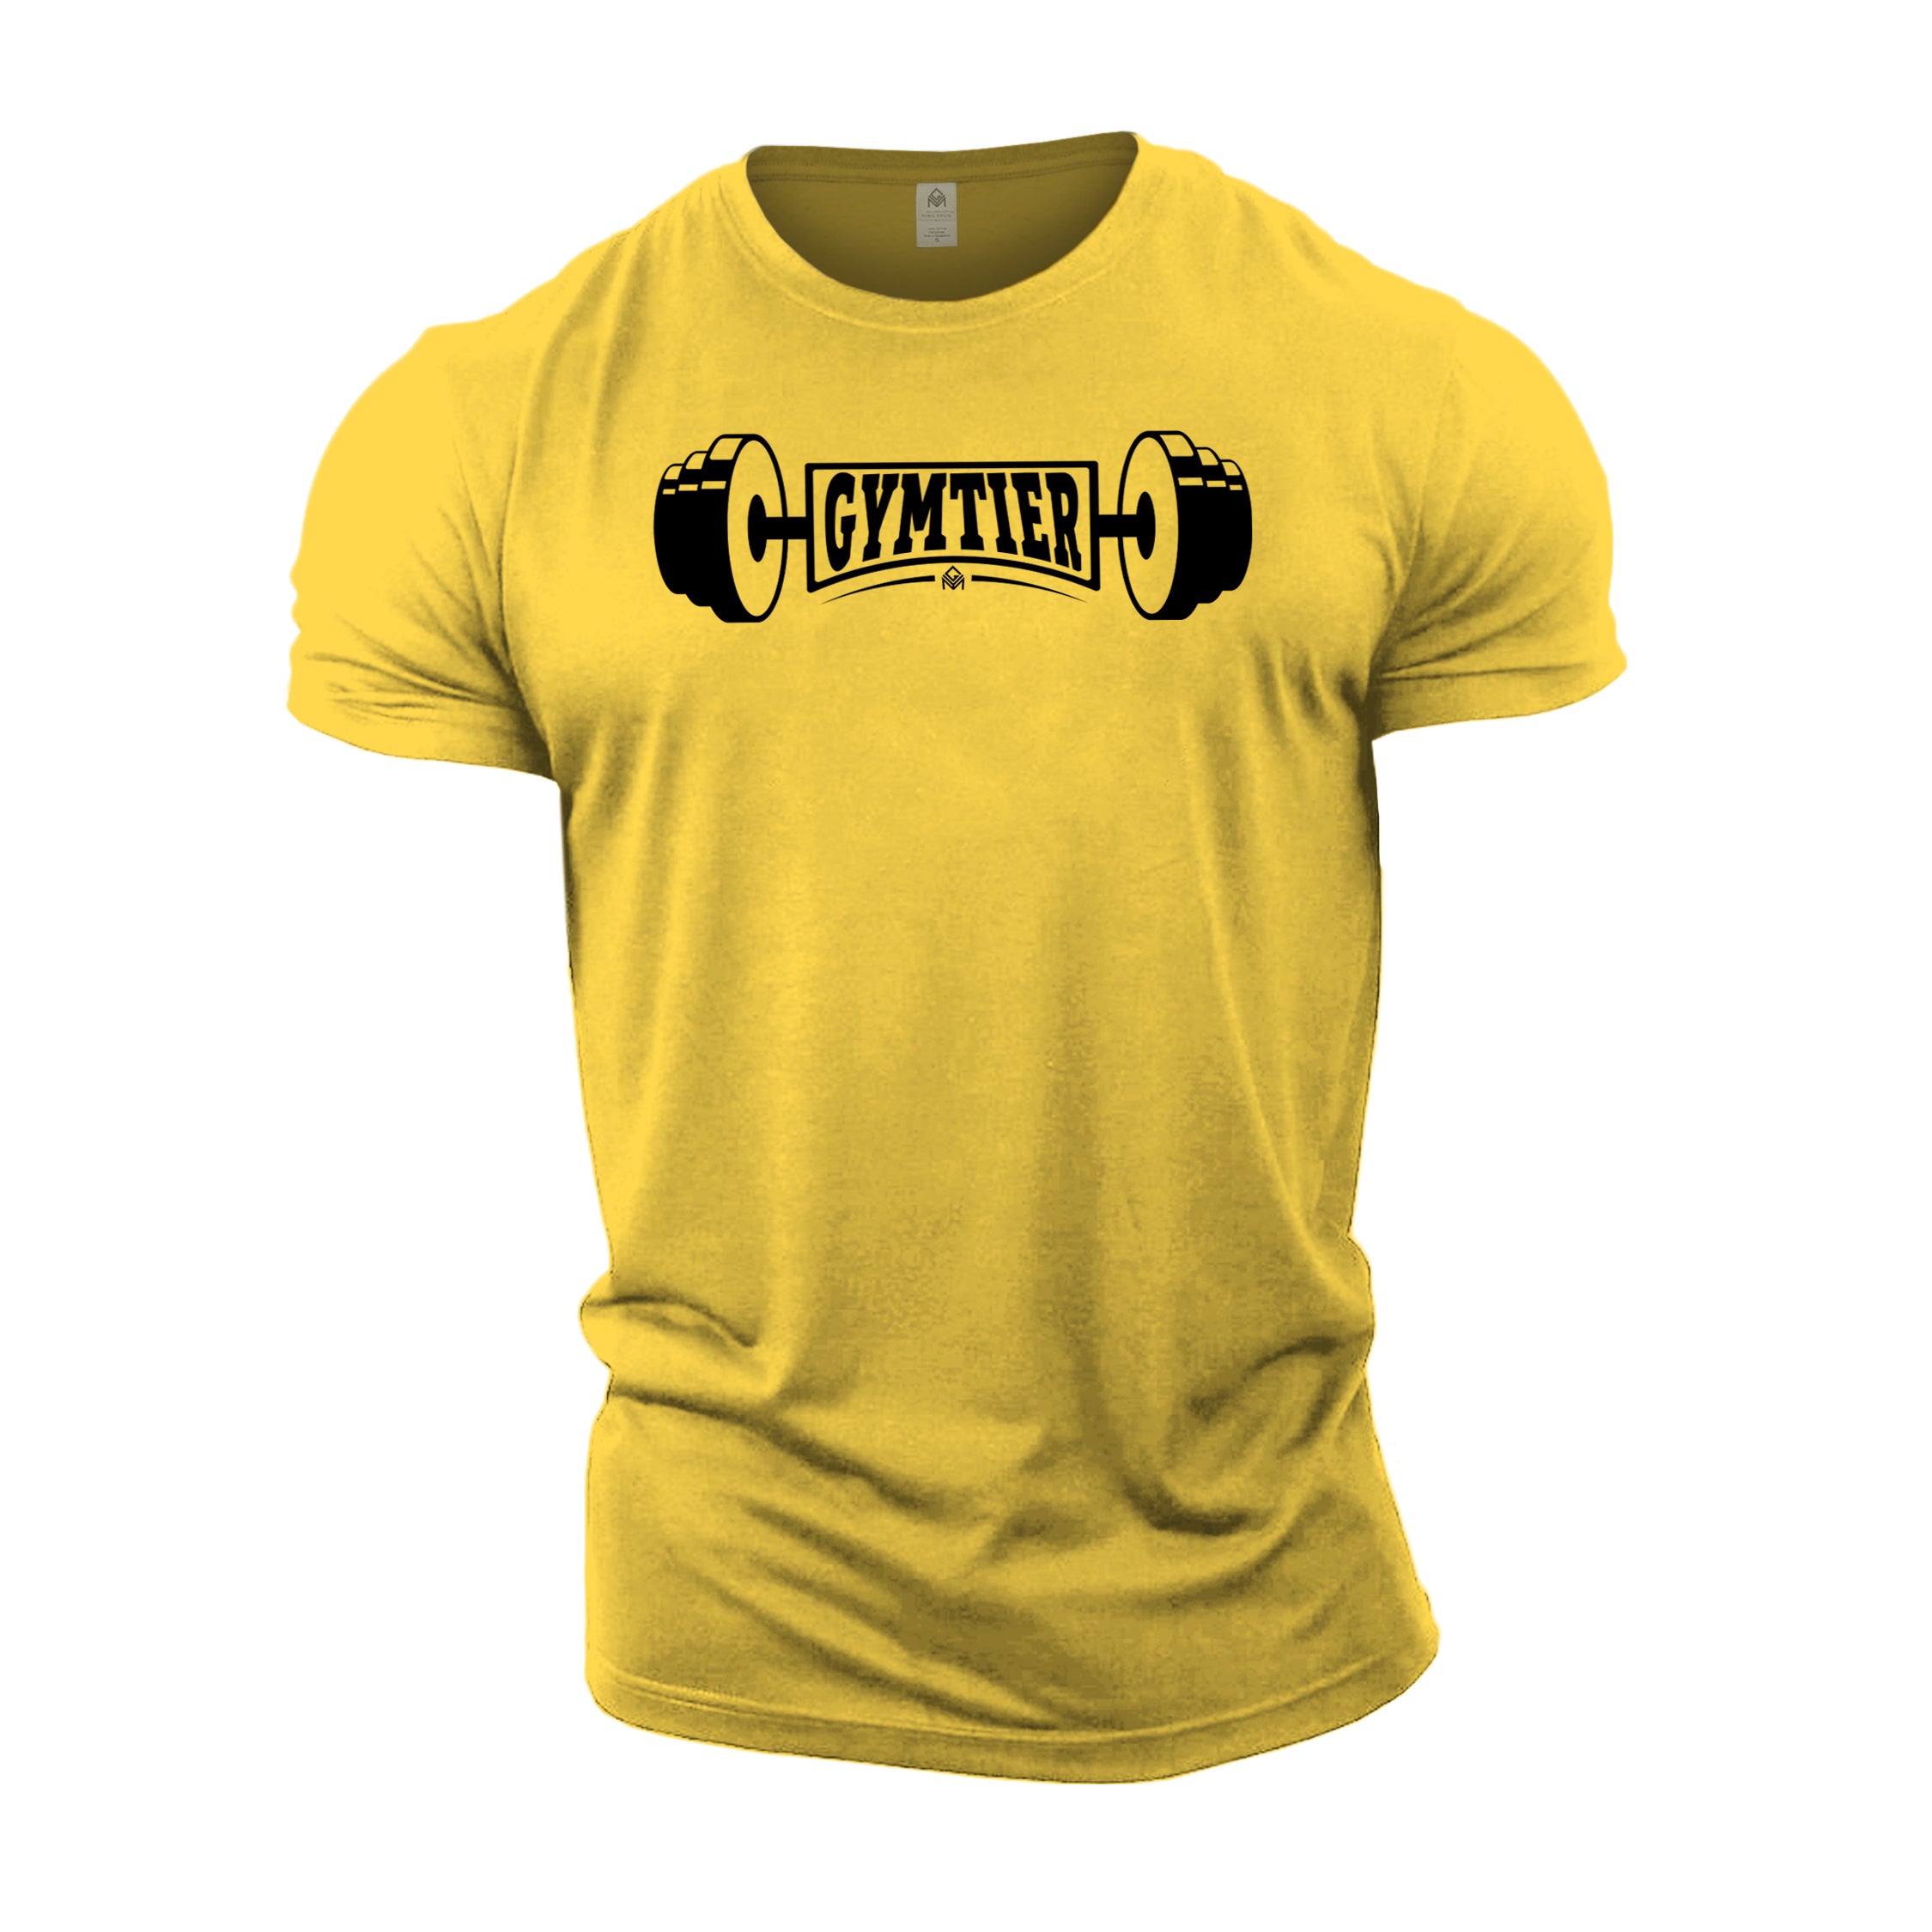 GYMTIER Longbar - Gym T-Shirt